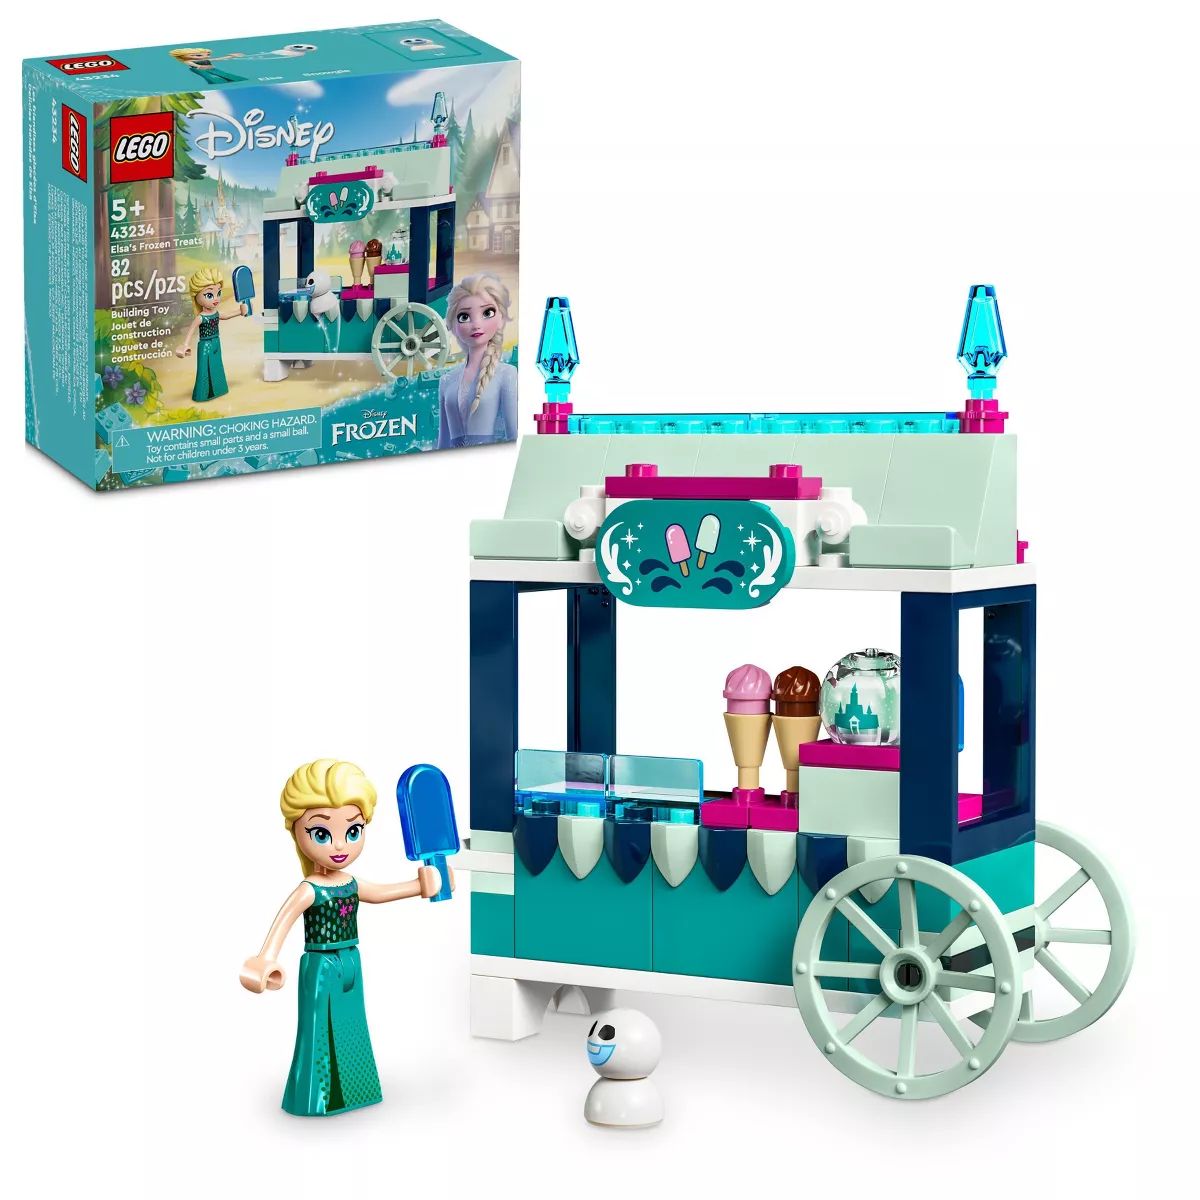 LEGO Disney Frozen Elsa's Frozen Treats 43234 | Target